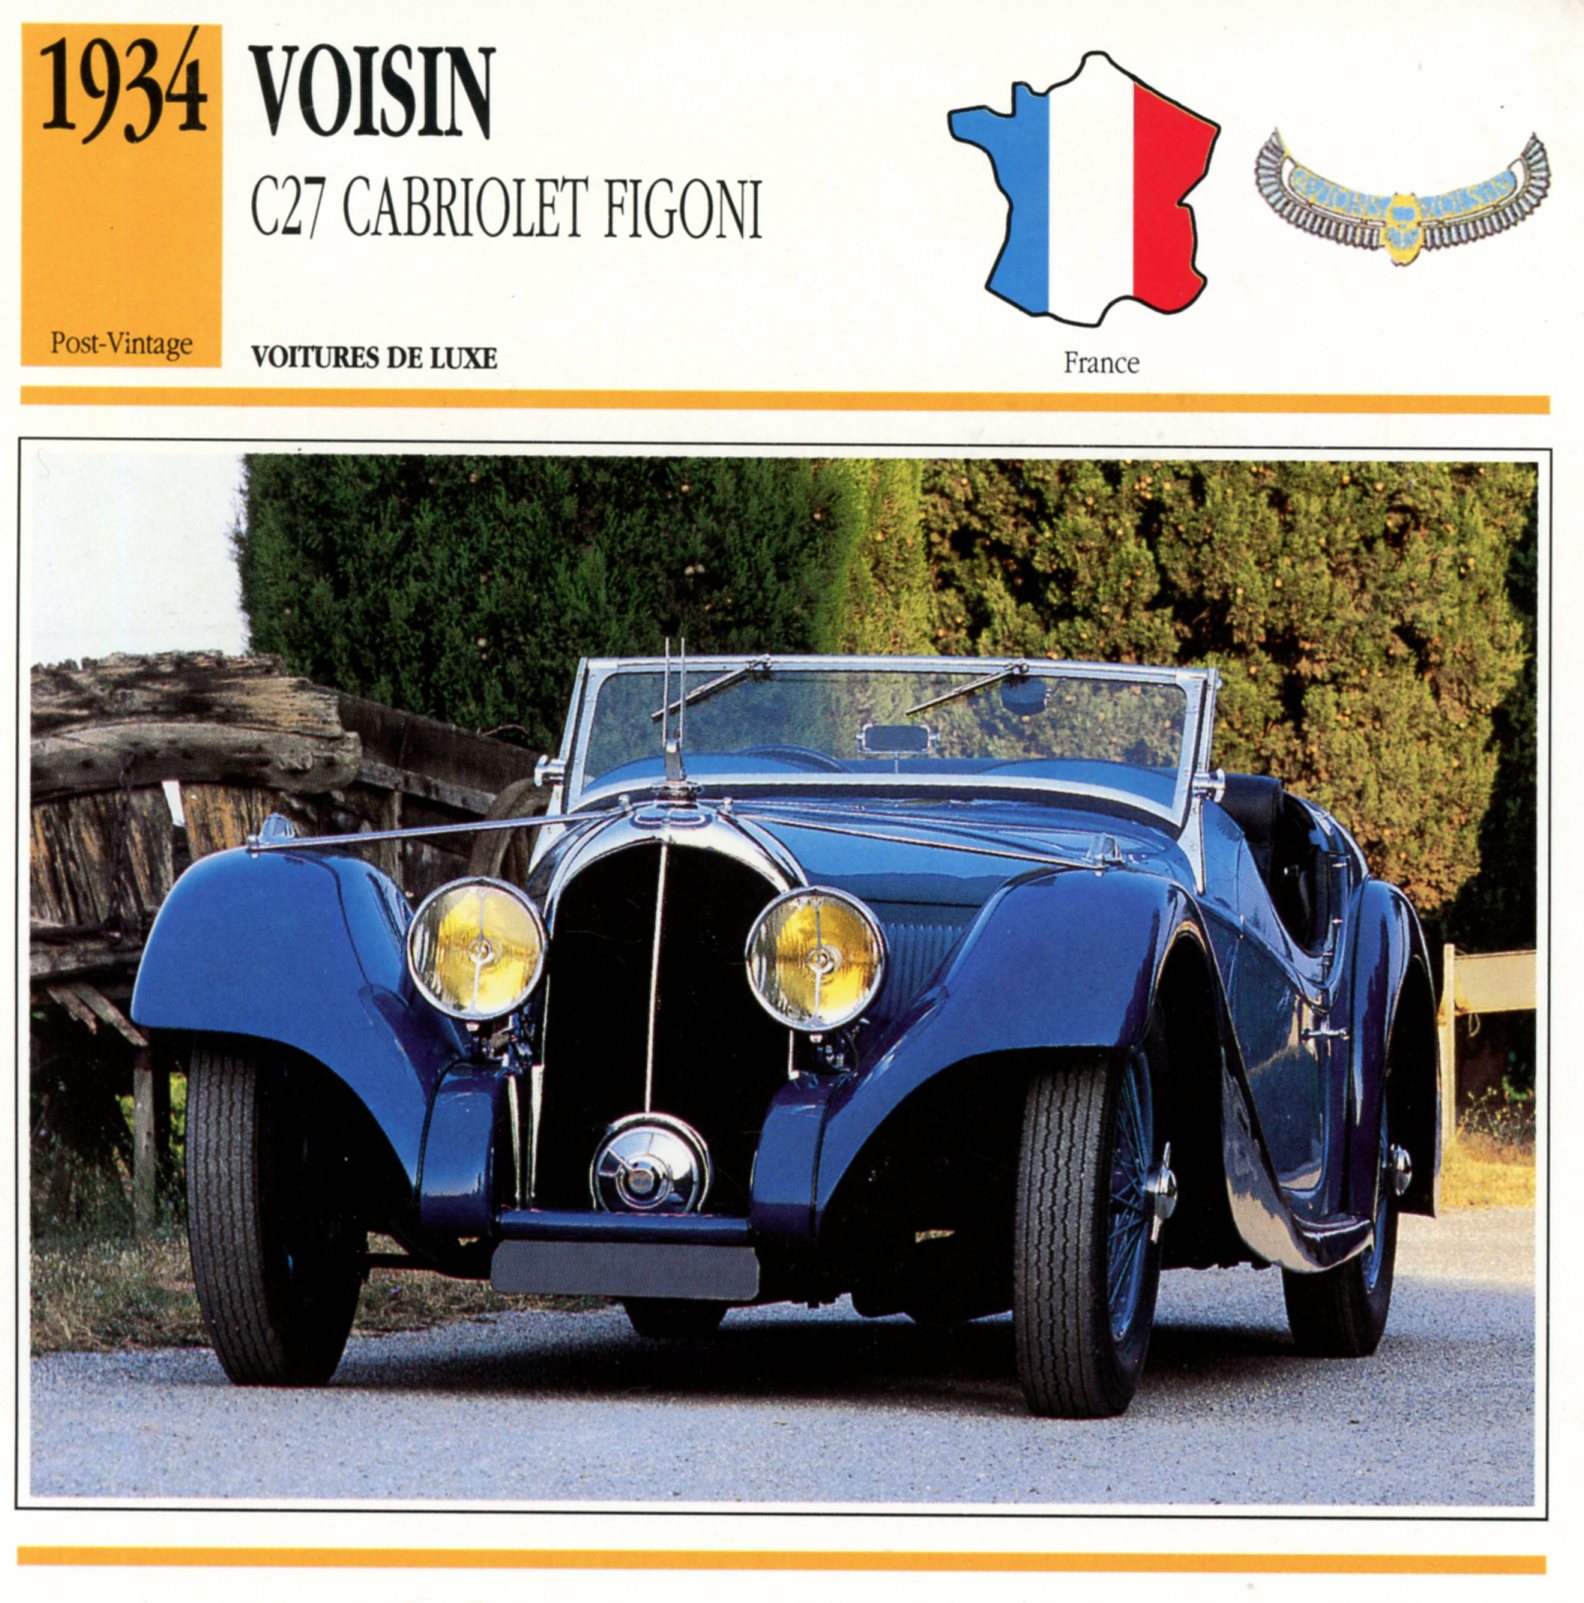 FICHE-AUTO-VOISIN-C27-FIGONI-1934-LEMASTERBROCKERS-CARS-CARD-ATLAS